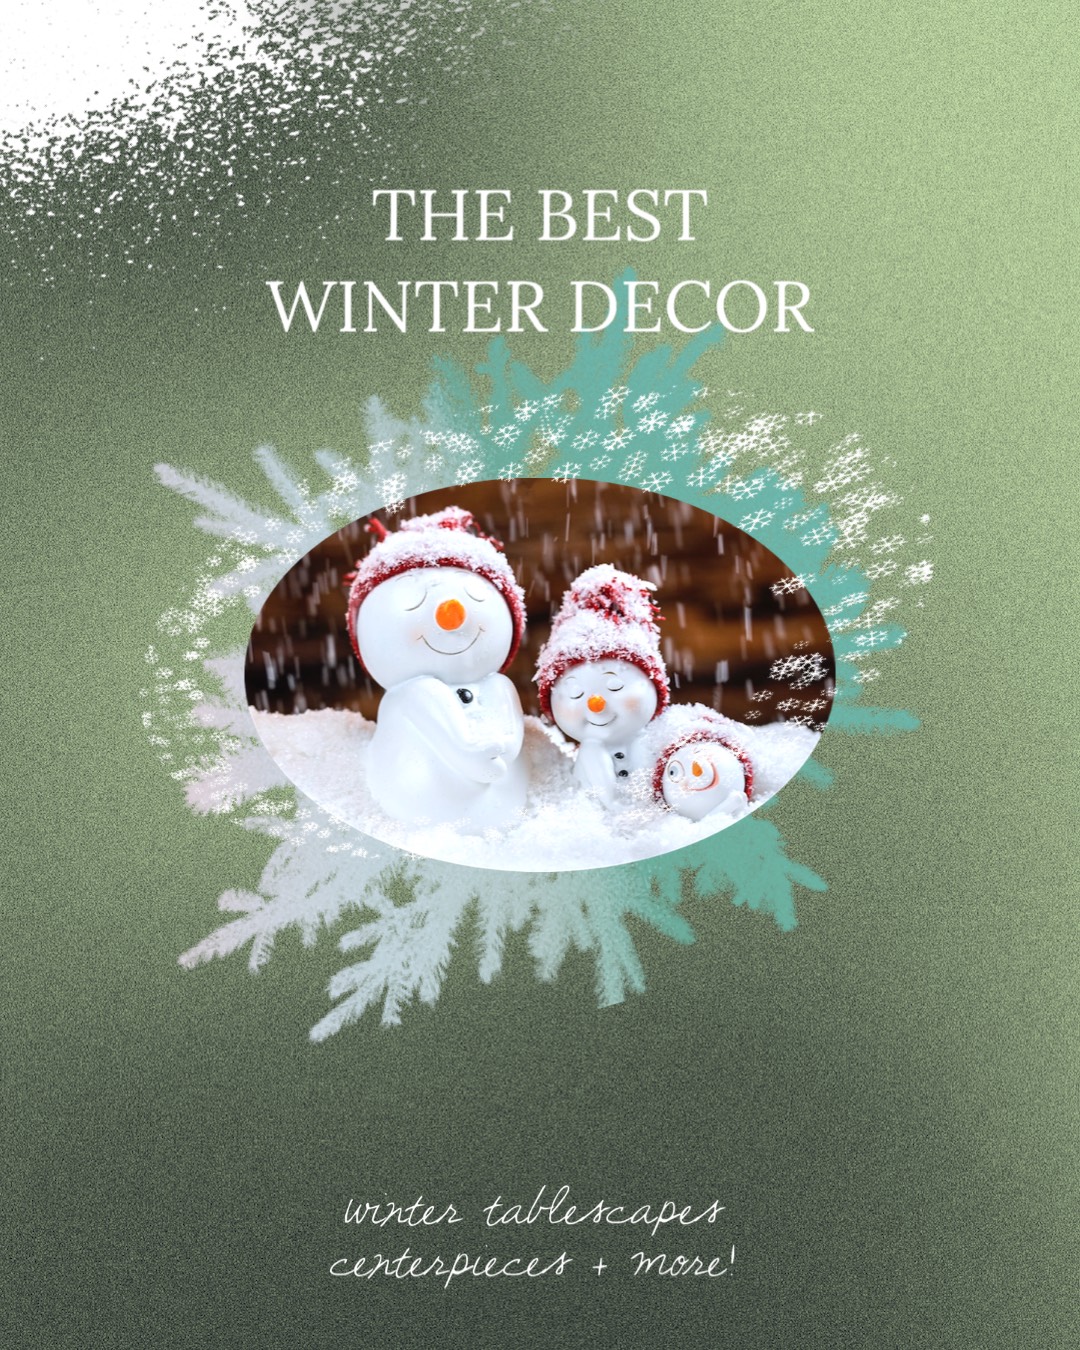 The best winter decor and snowman Winter Wonderland template